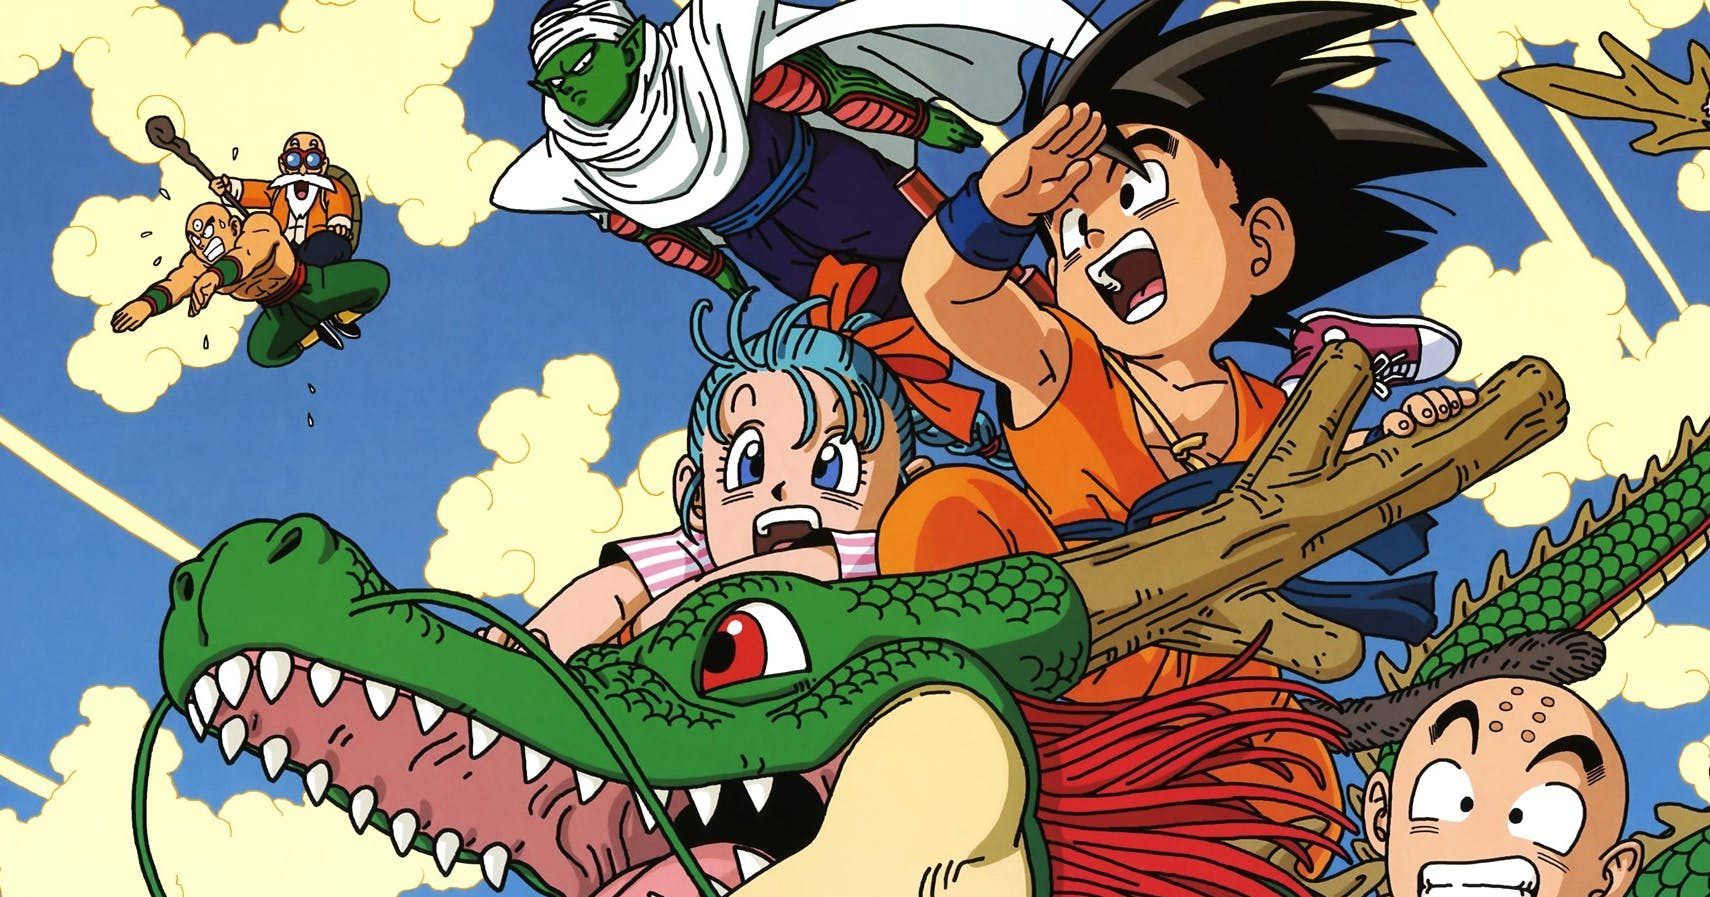 Goku, Bulma, Krillin and Piccolo in the original Dragon Ball anime